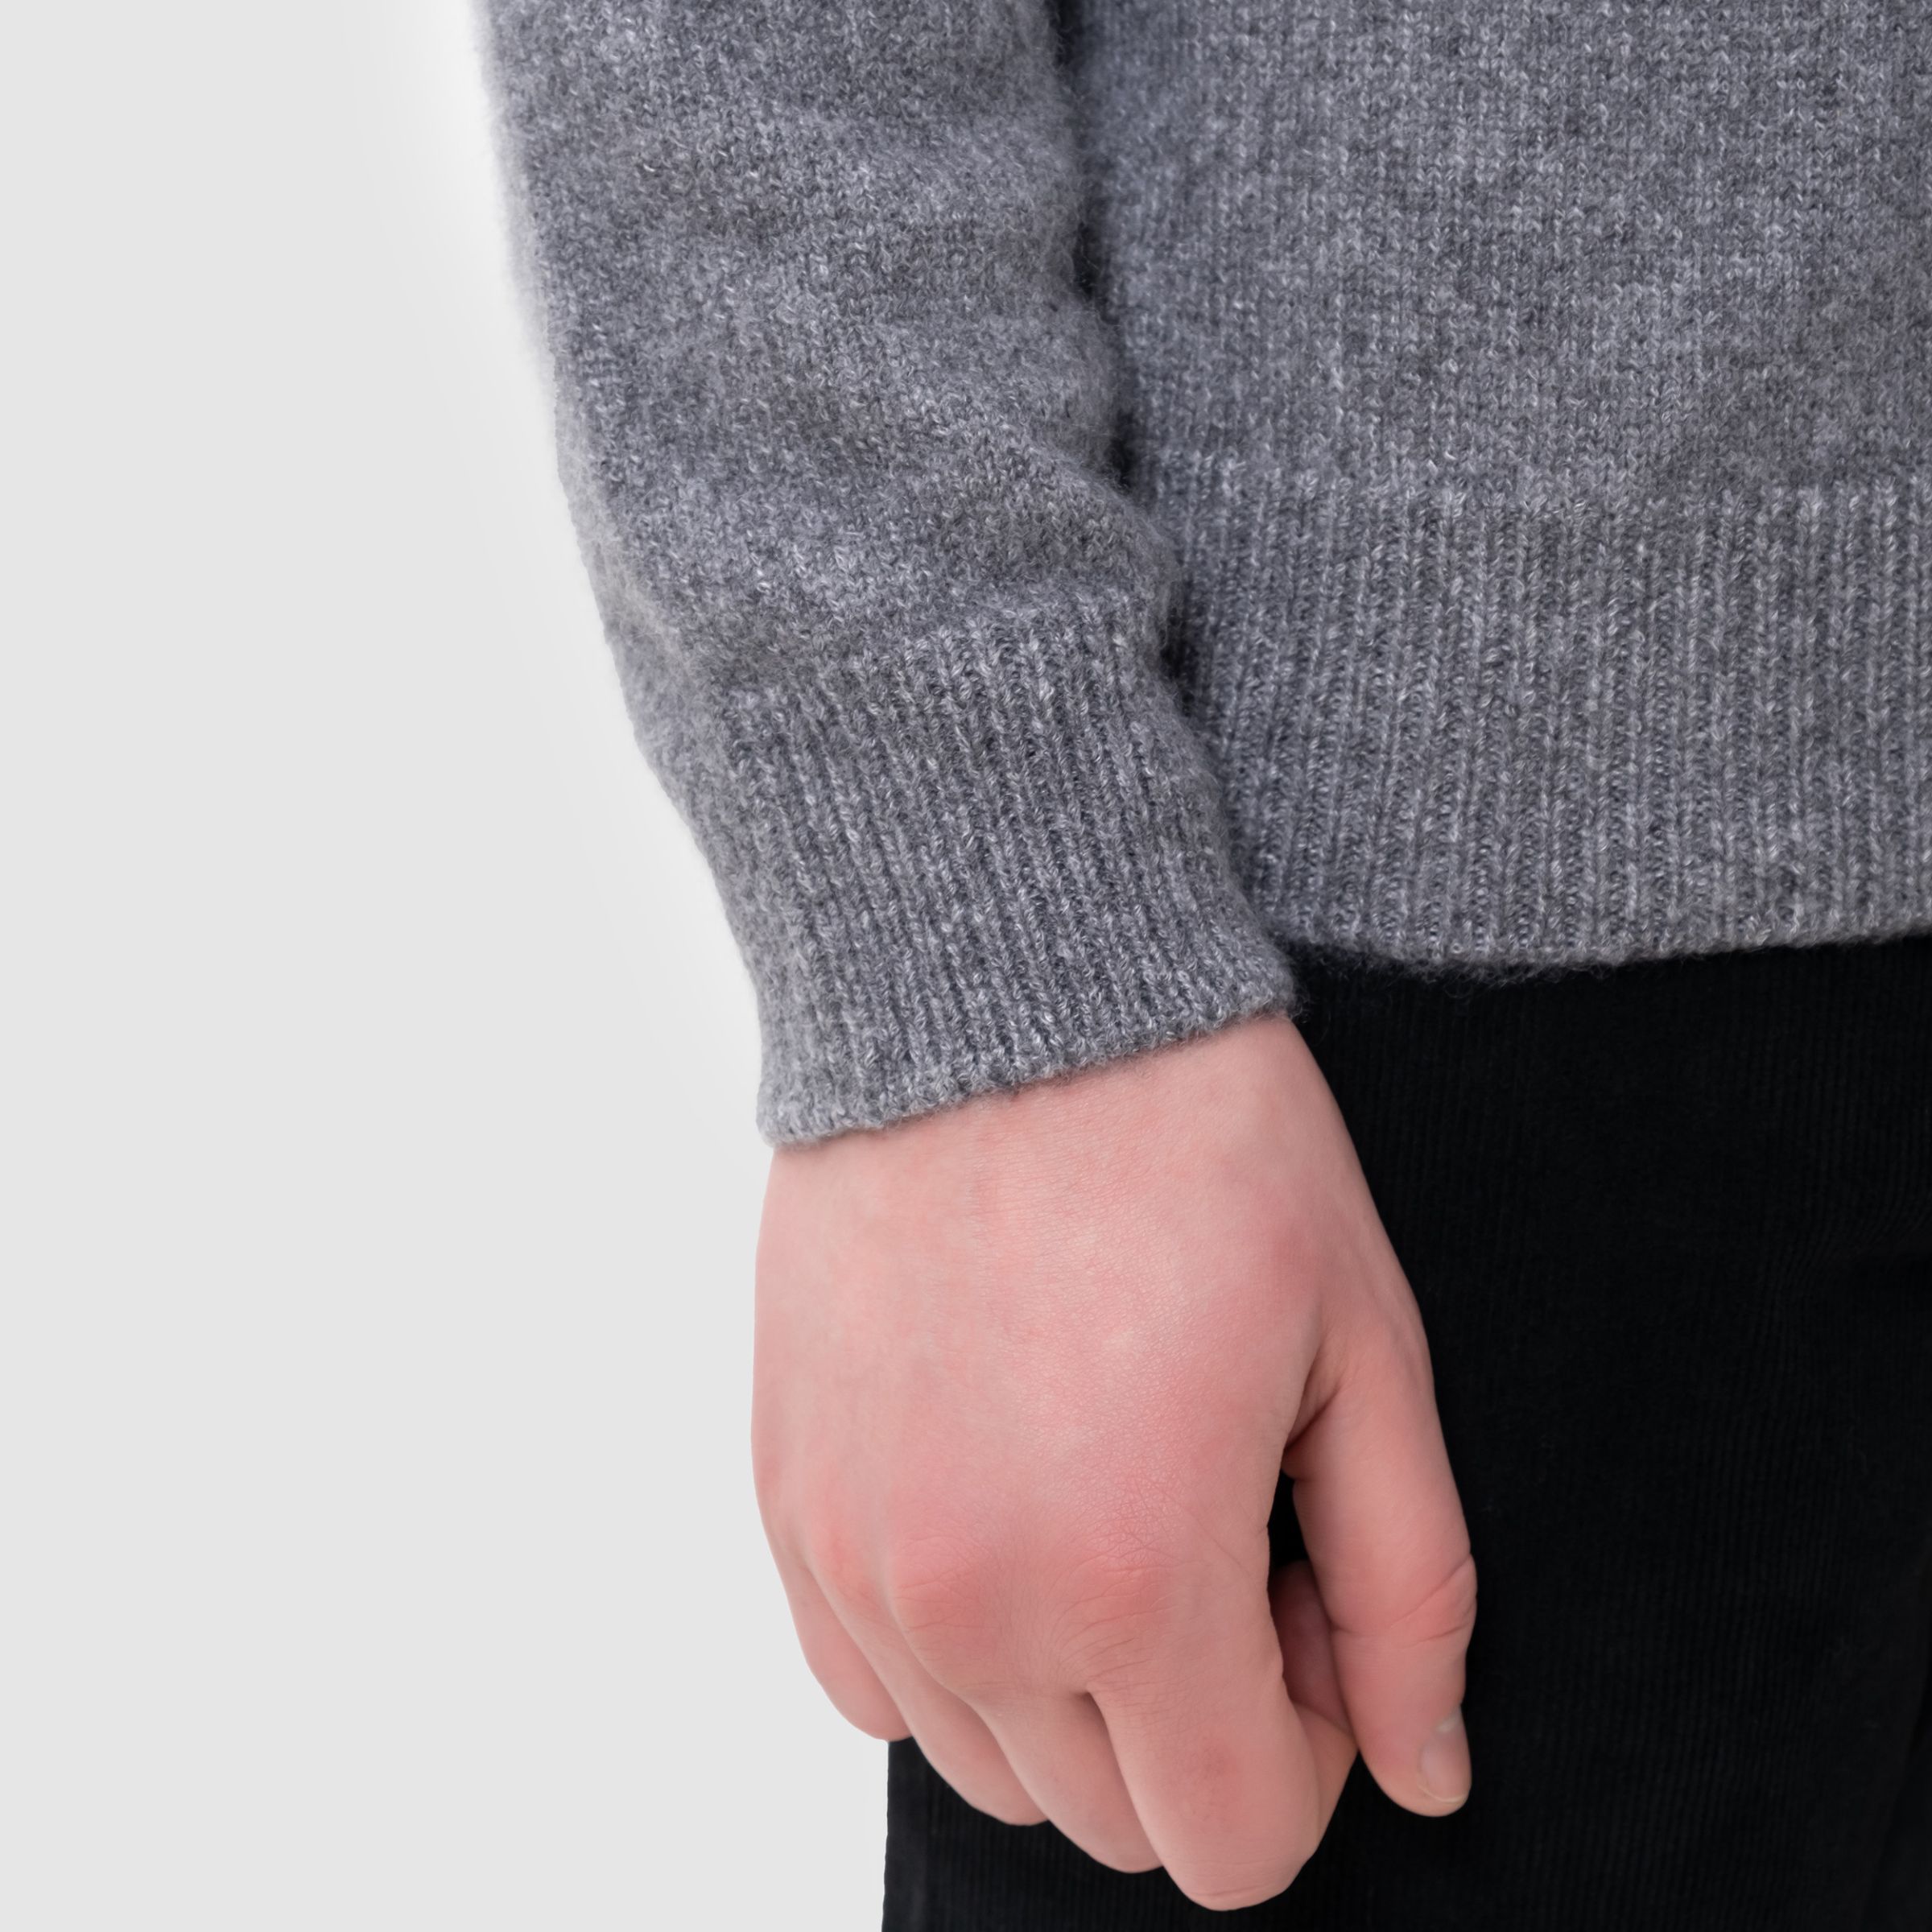 Пуловер Brett Johnson темно-сірий